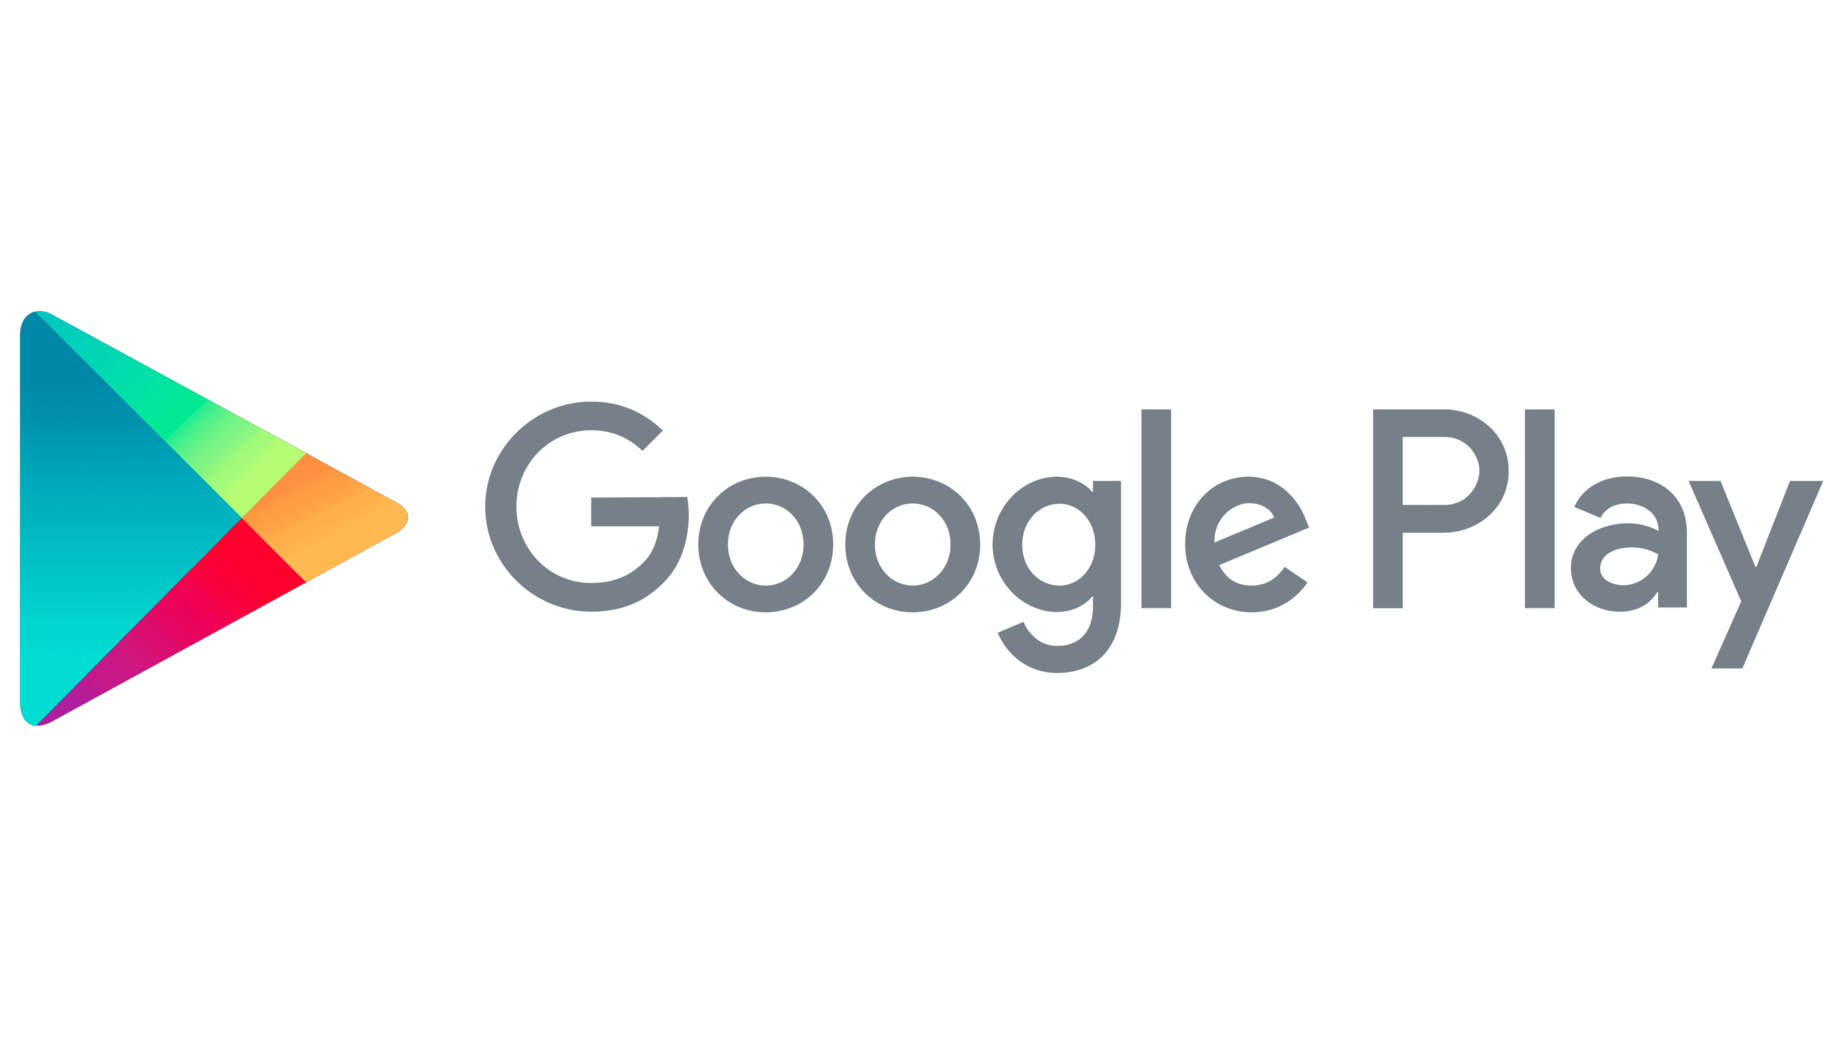 Google play sign 2015 2016